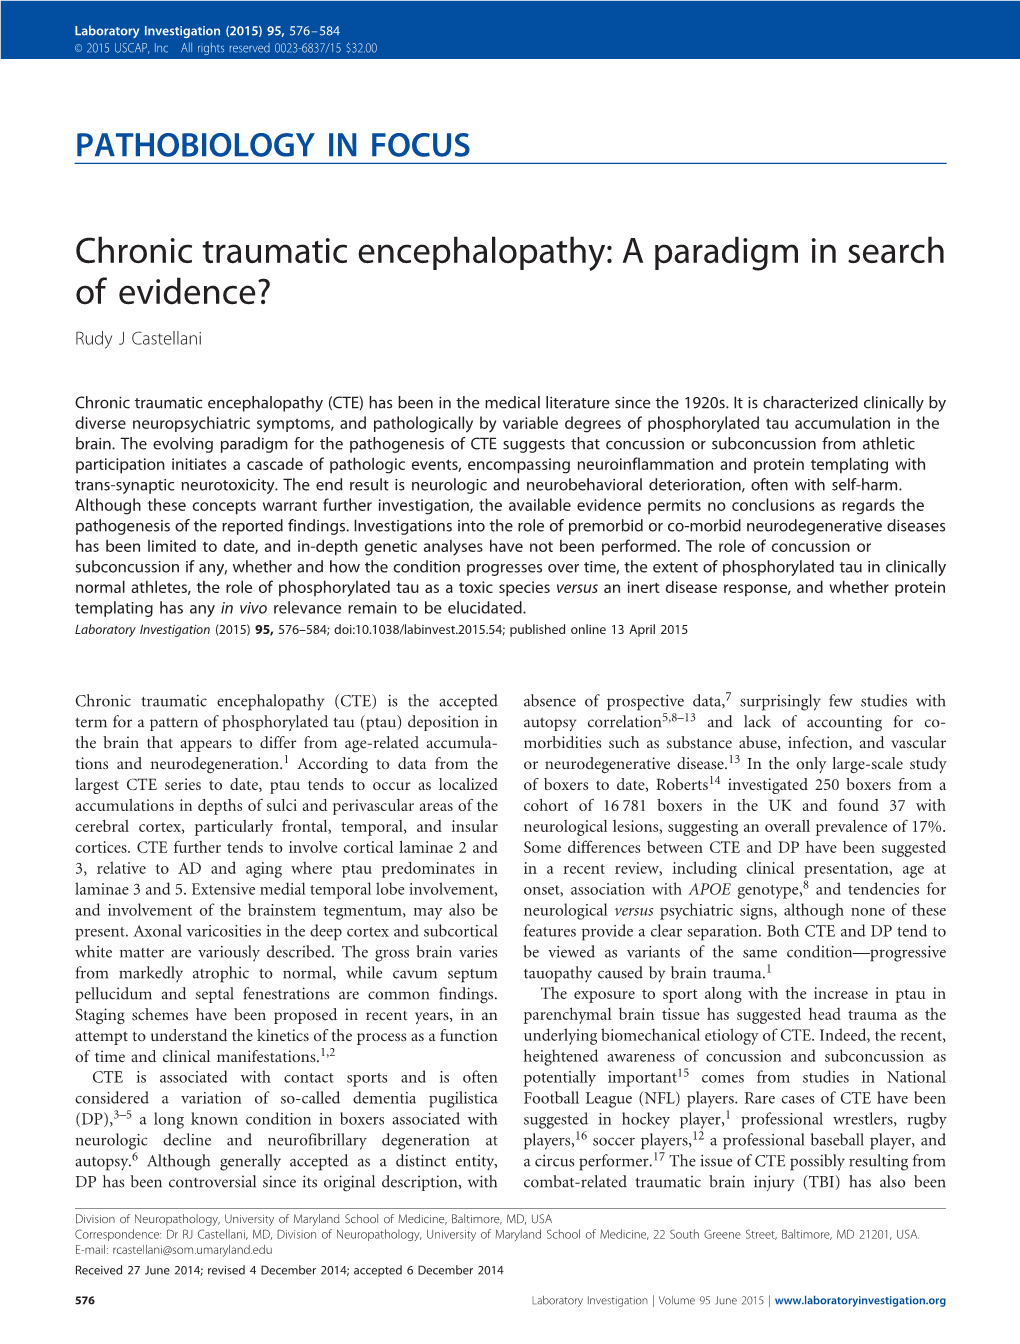 Chronic Traumatic Encephalopathy: a Paradigm in Search of Evidence? Rudy J Castellani